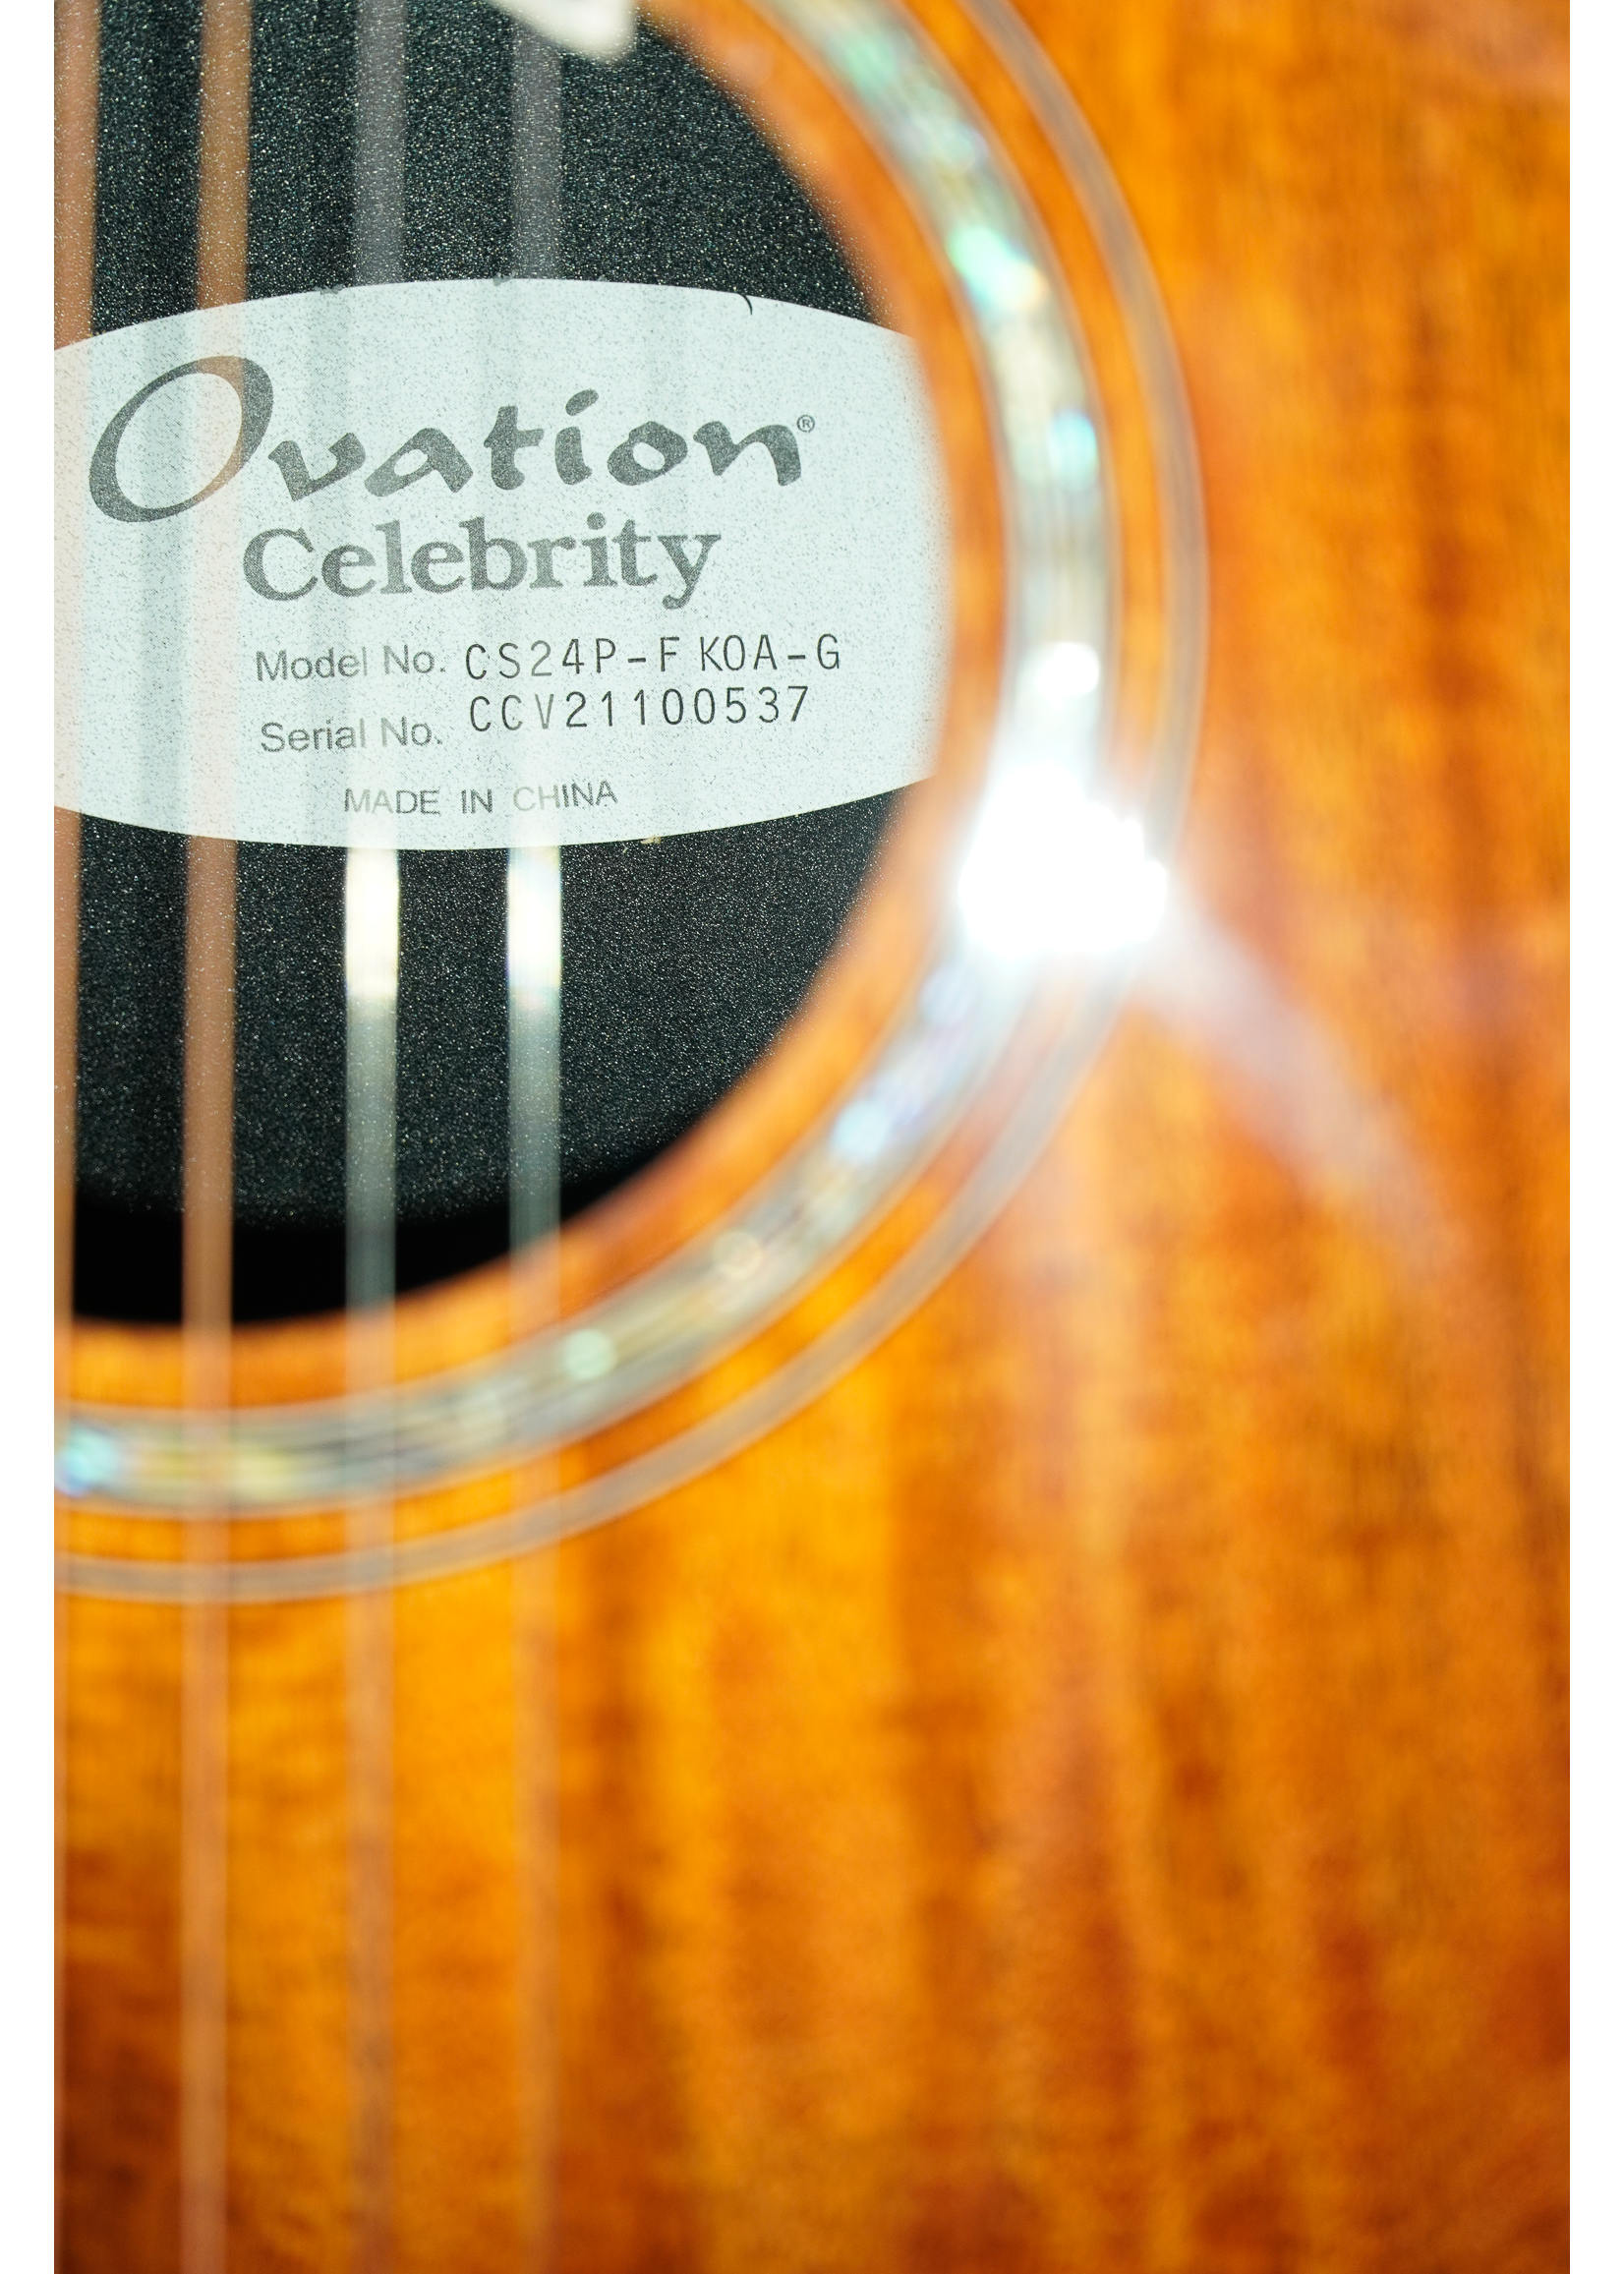 Ovation Ovation Celebrity CS24P-FKOA